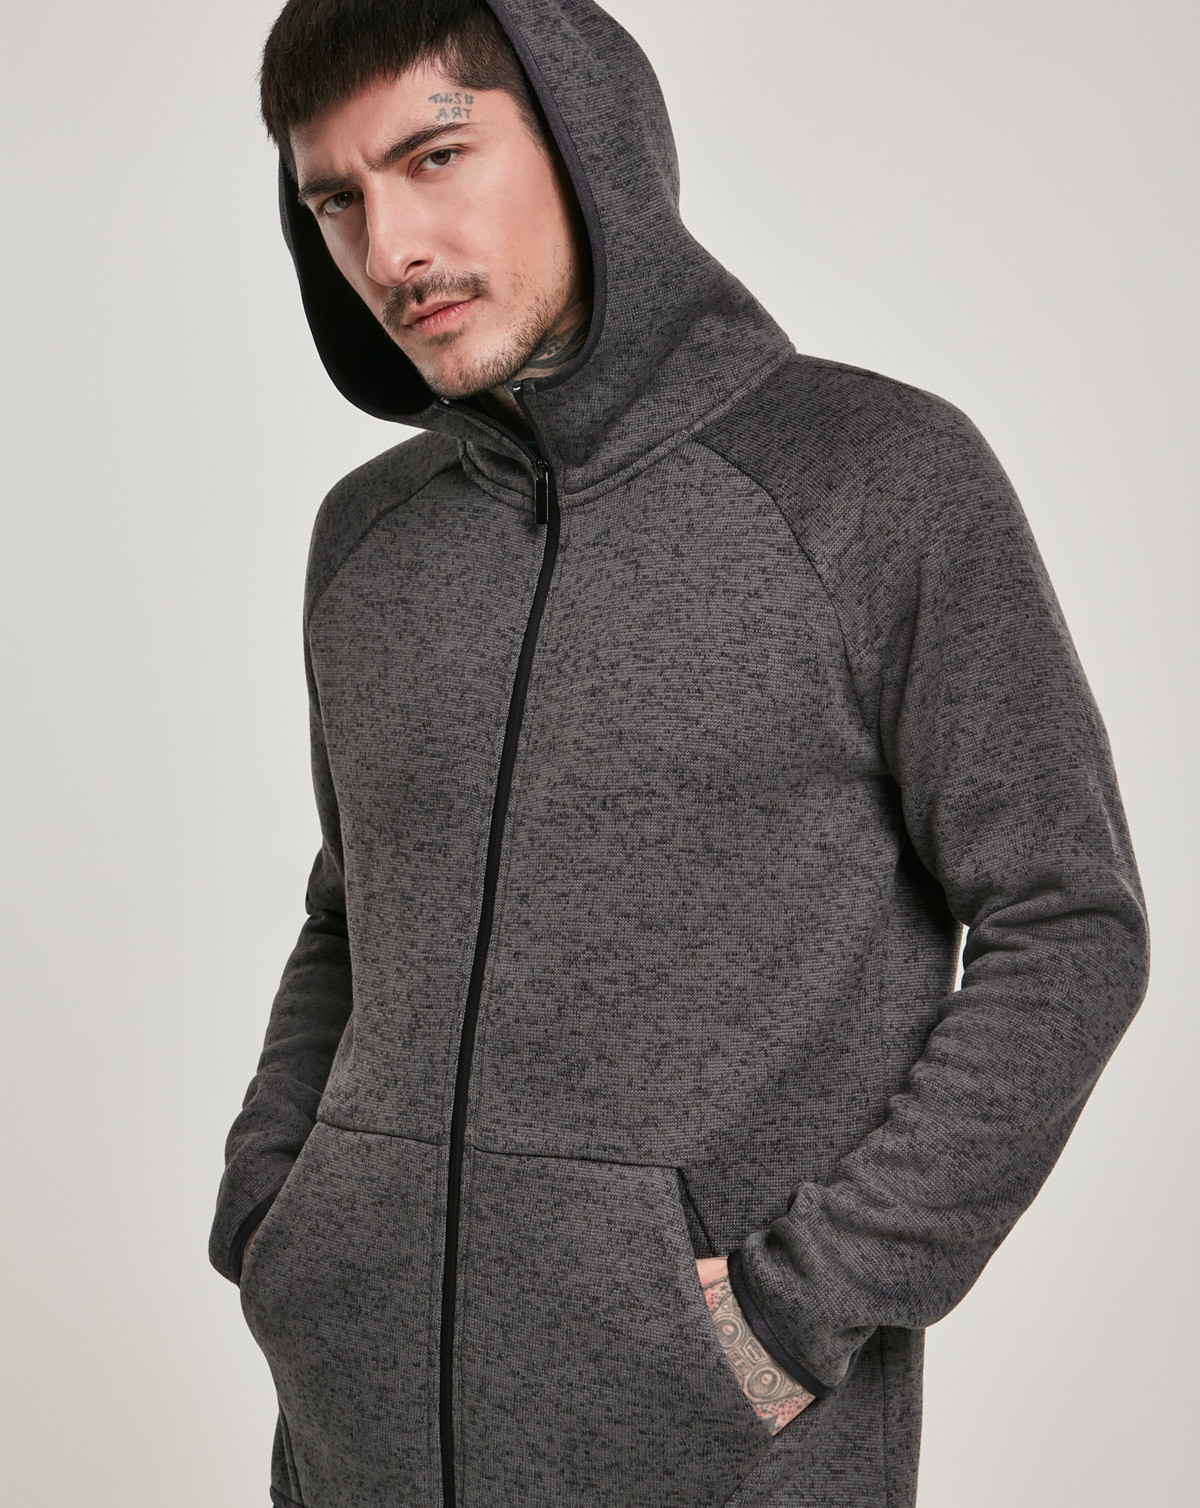 Urban Classics Knit Fleece Zip Hoody (Charcoal, 3XL)